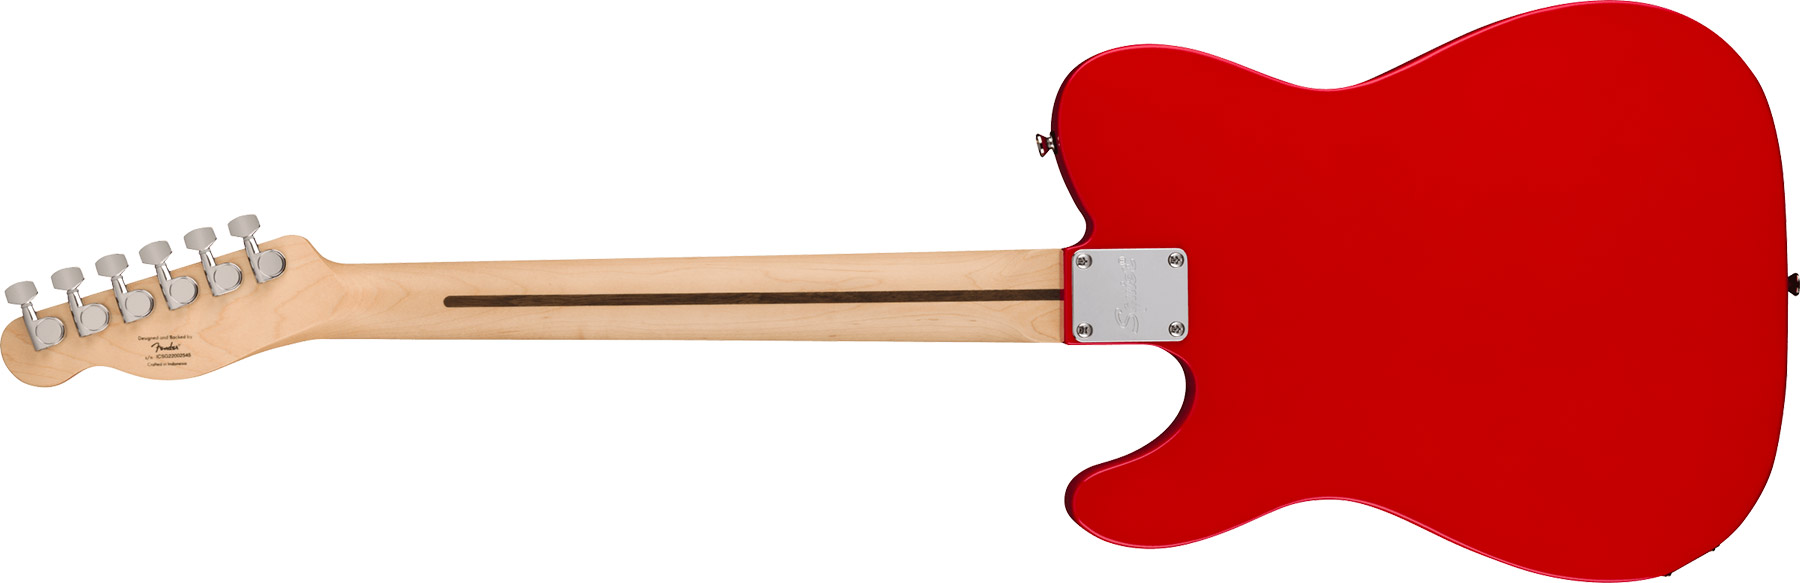 Squier Tele Sonic 2s Ht Lau - Torino Red - Televorm elektrische gitaar - Variation 1